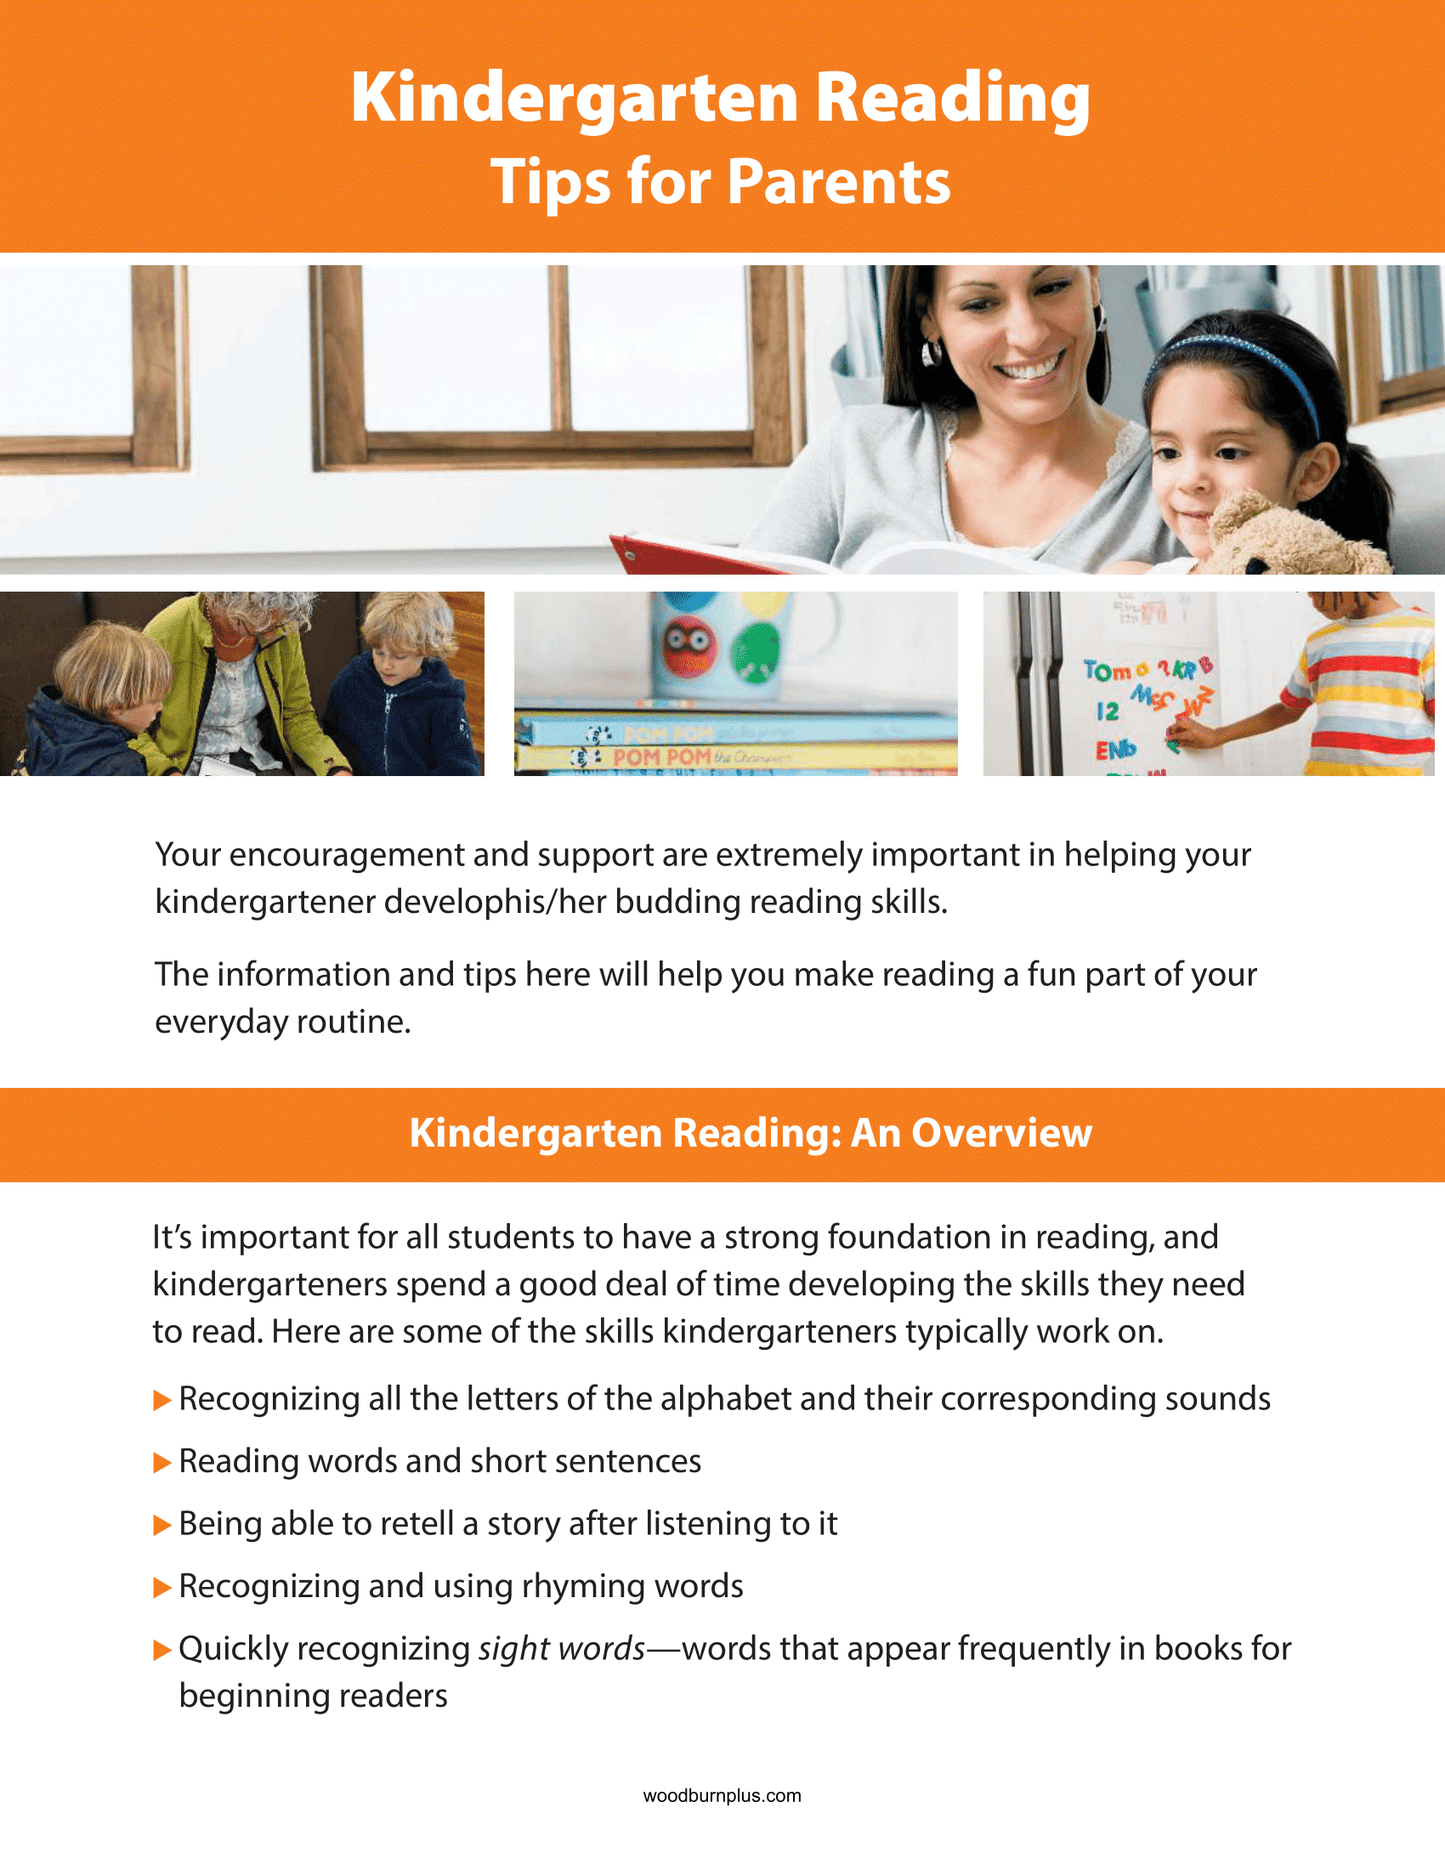 Kindergarten Reading - Tips for Parents